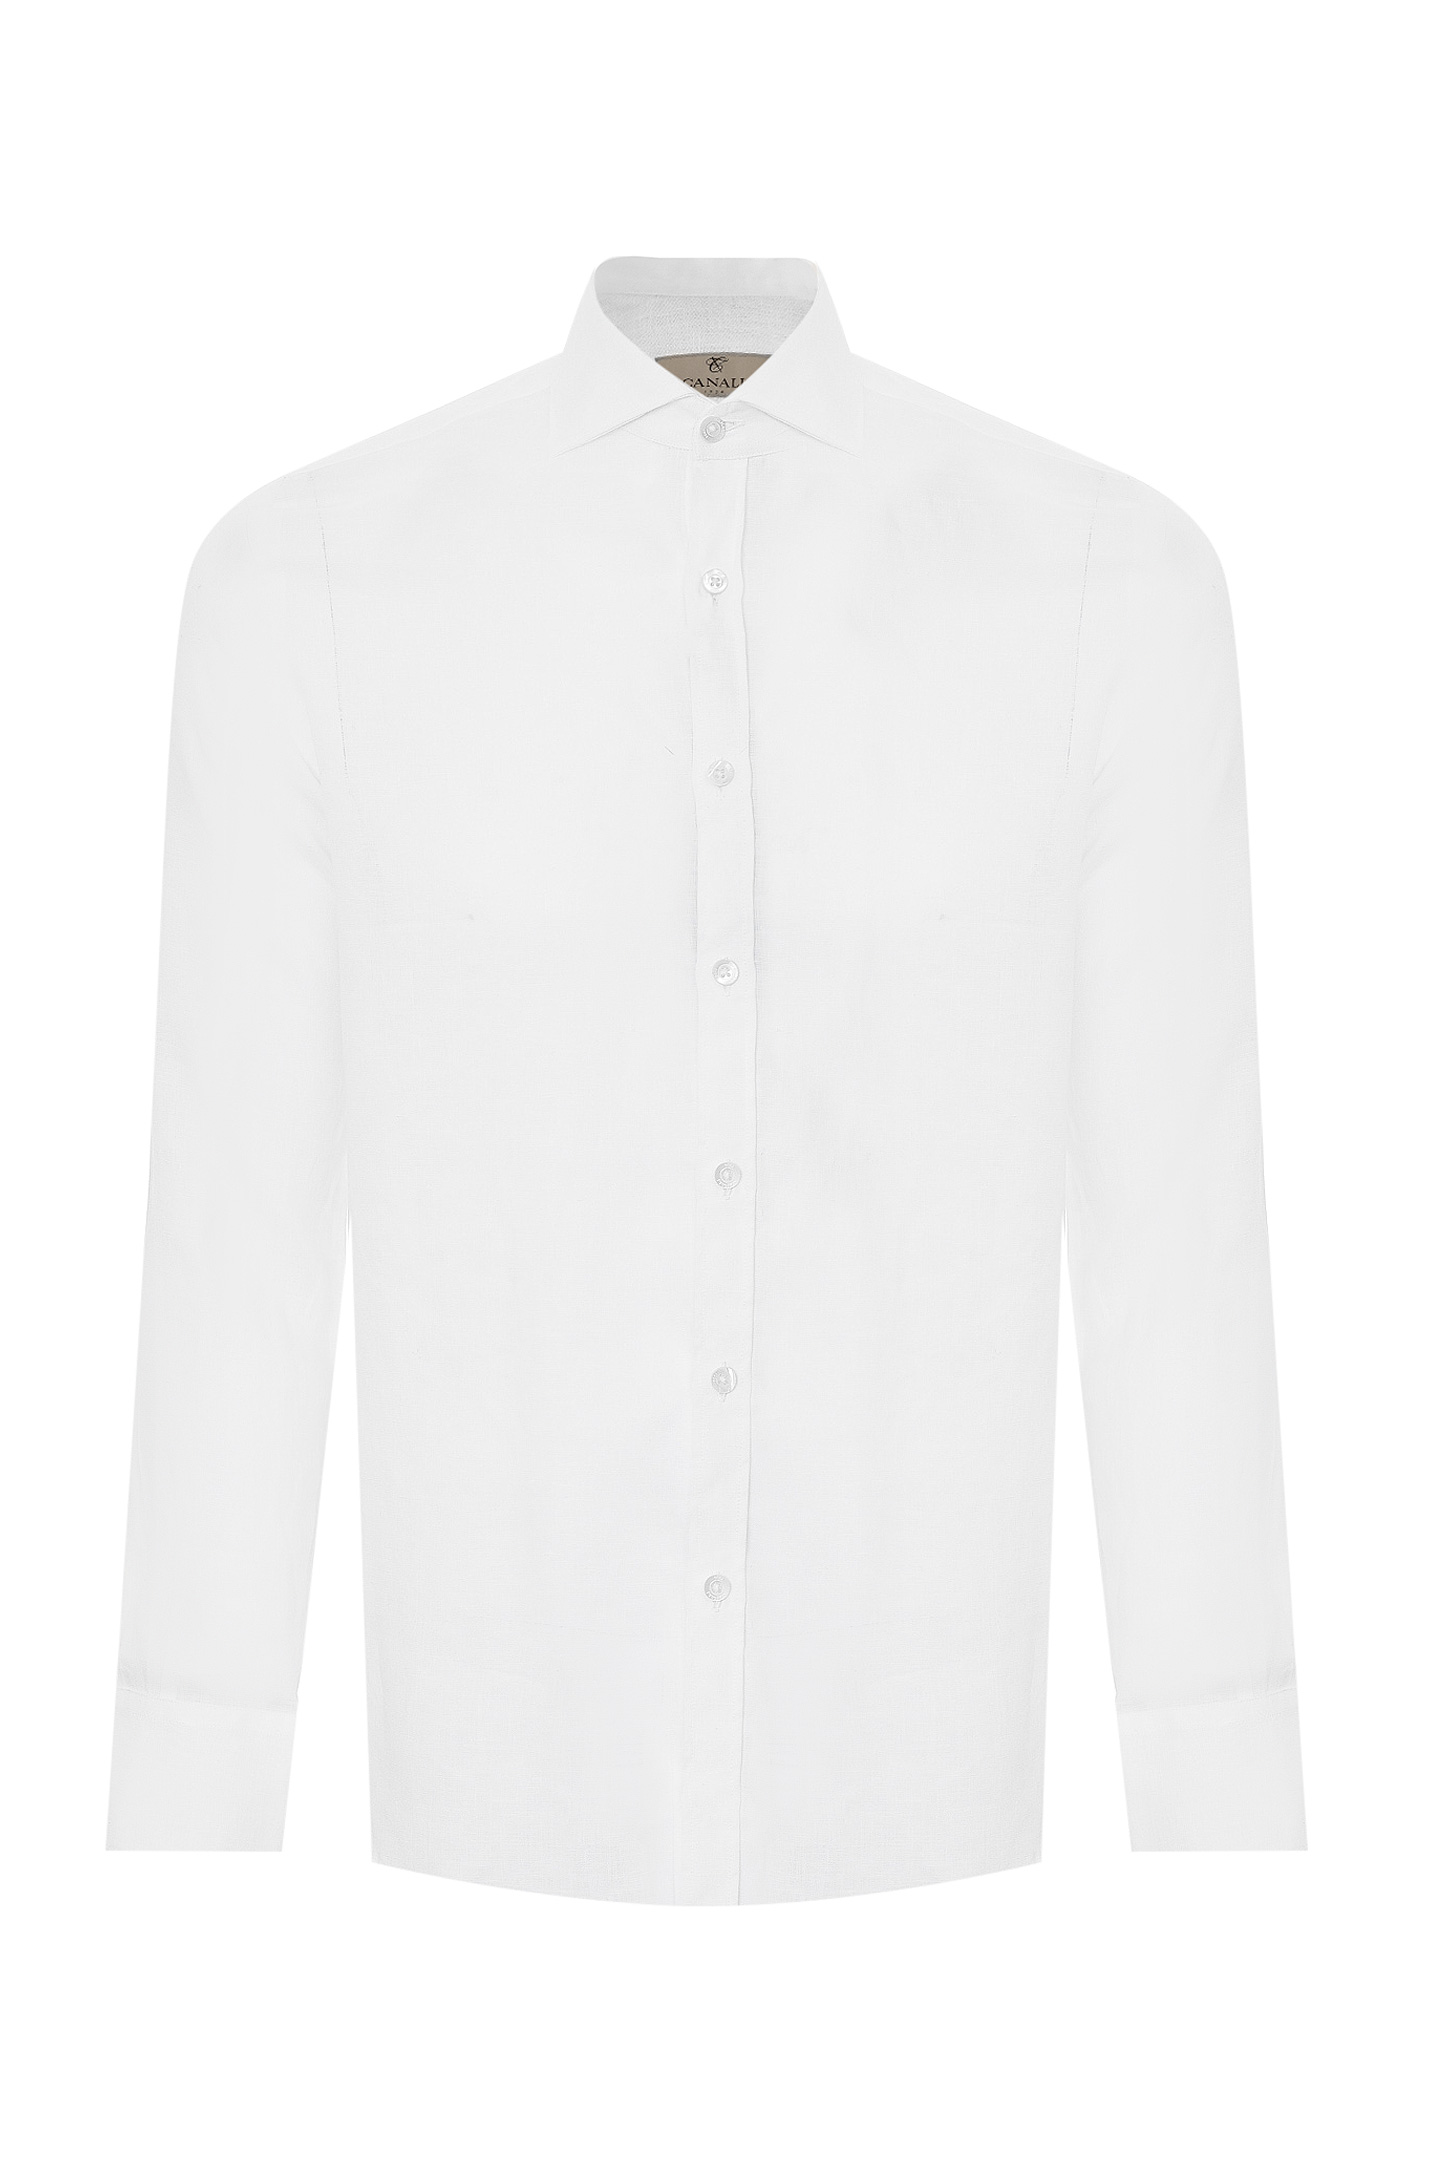 Рубашка CANALI GL02469 L7B1, цвет: Белый, Мужской